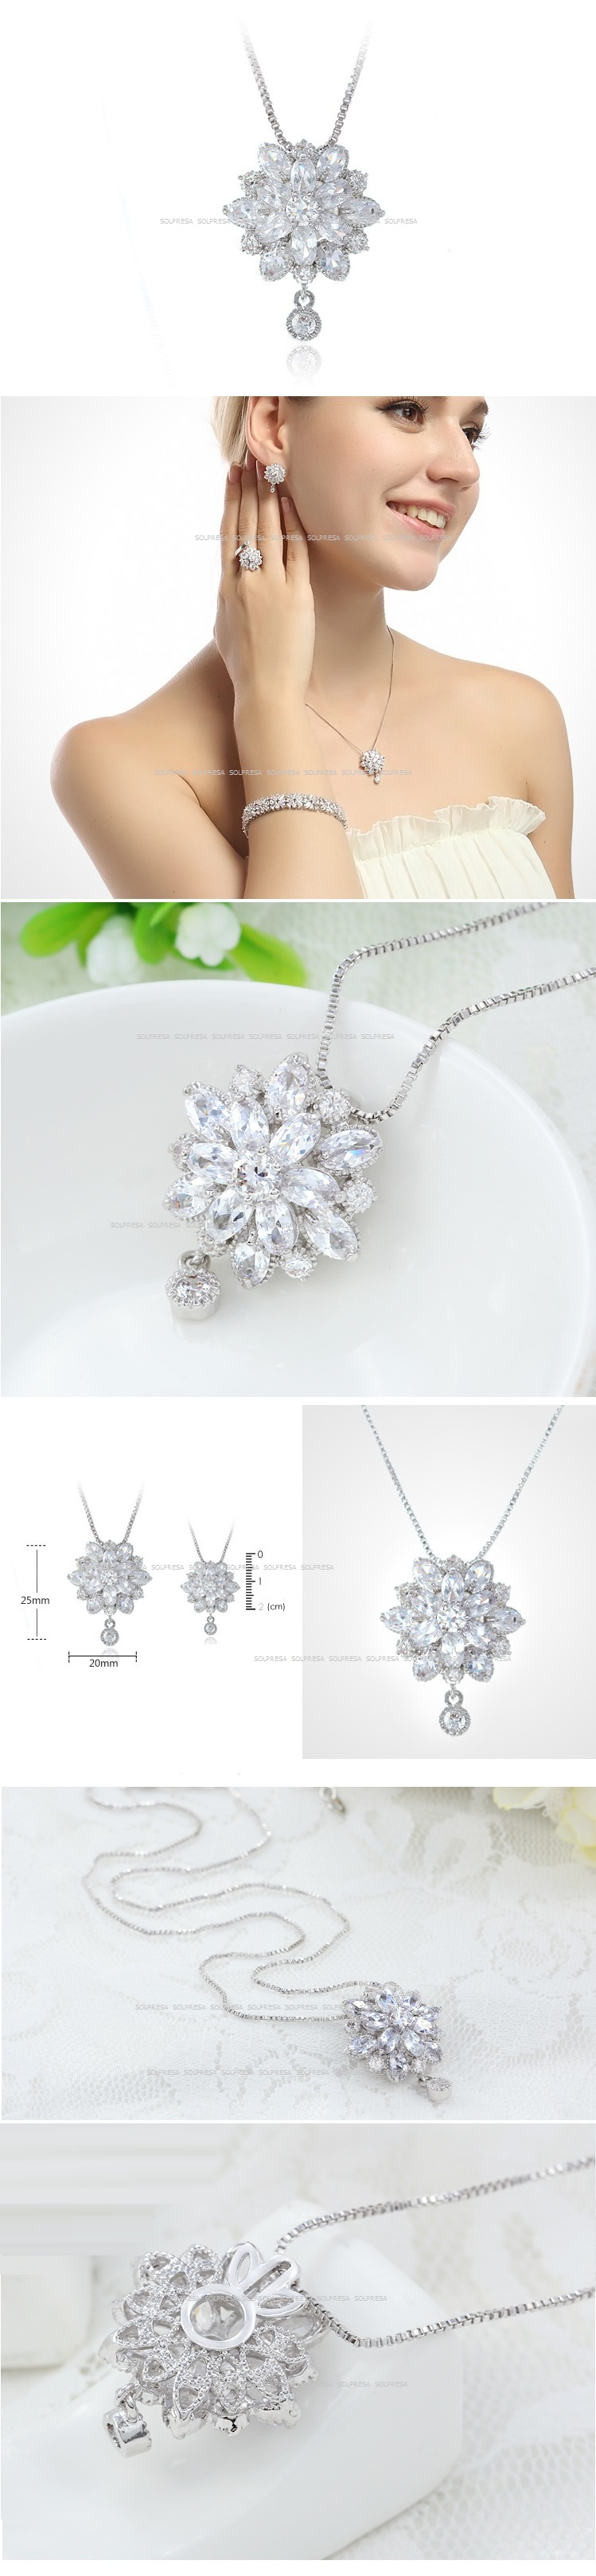 Solpresa Bridal Prosperity Flower 18K Necklace